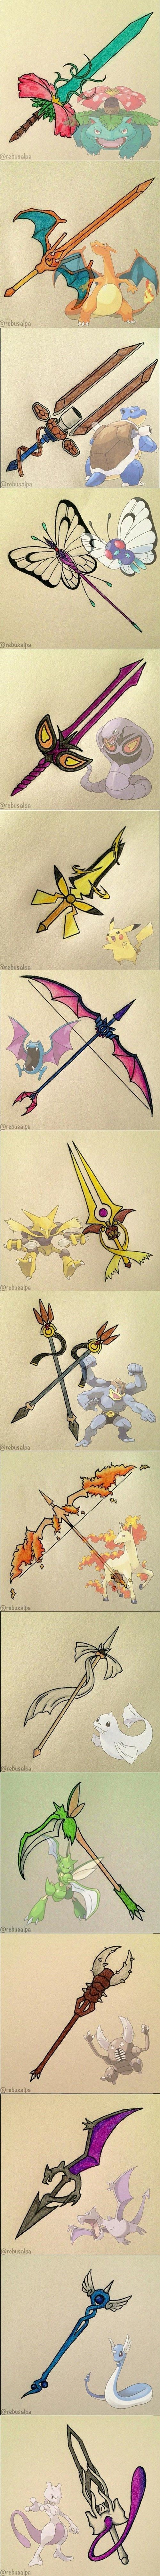 Pokémon Weapon Art. I have to say, I love Cha...